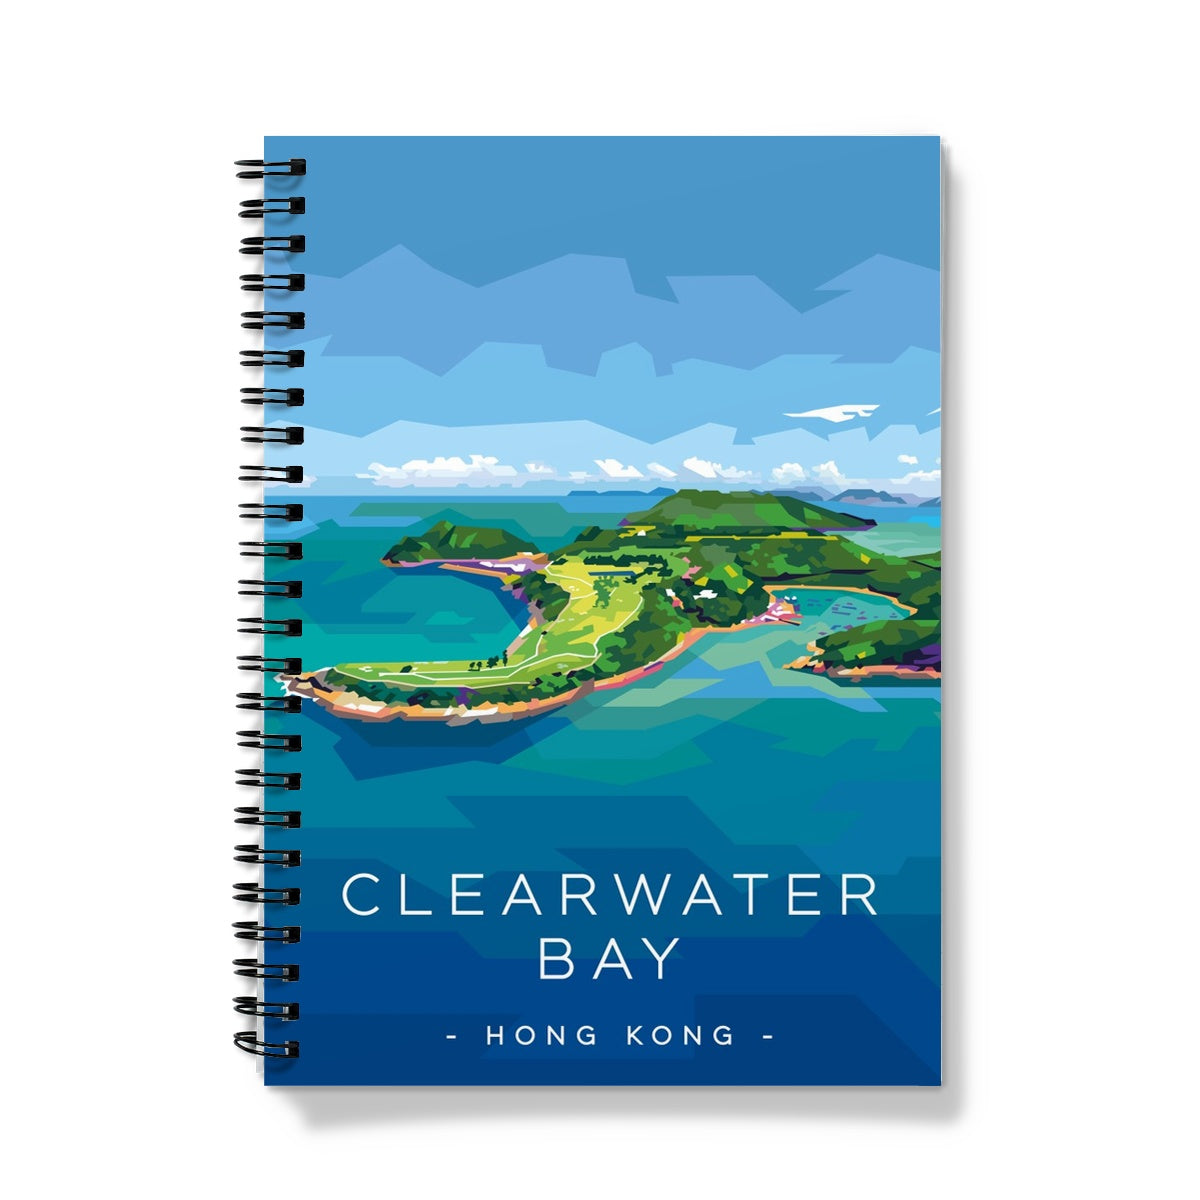 Hong Kong Travel - Clearwater Bay Notebook